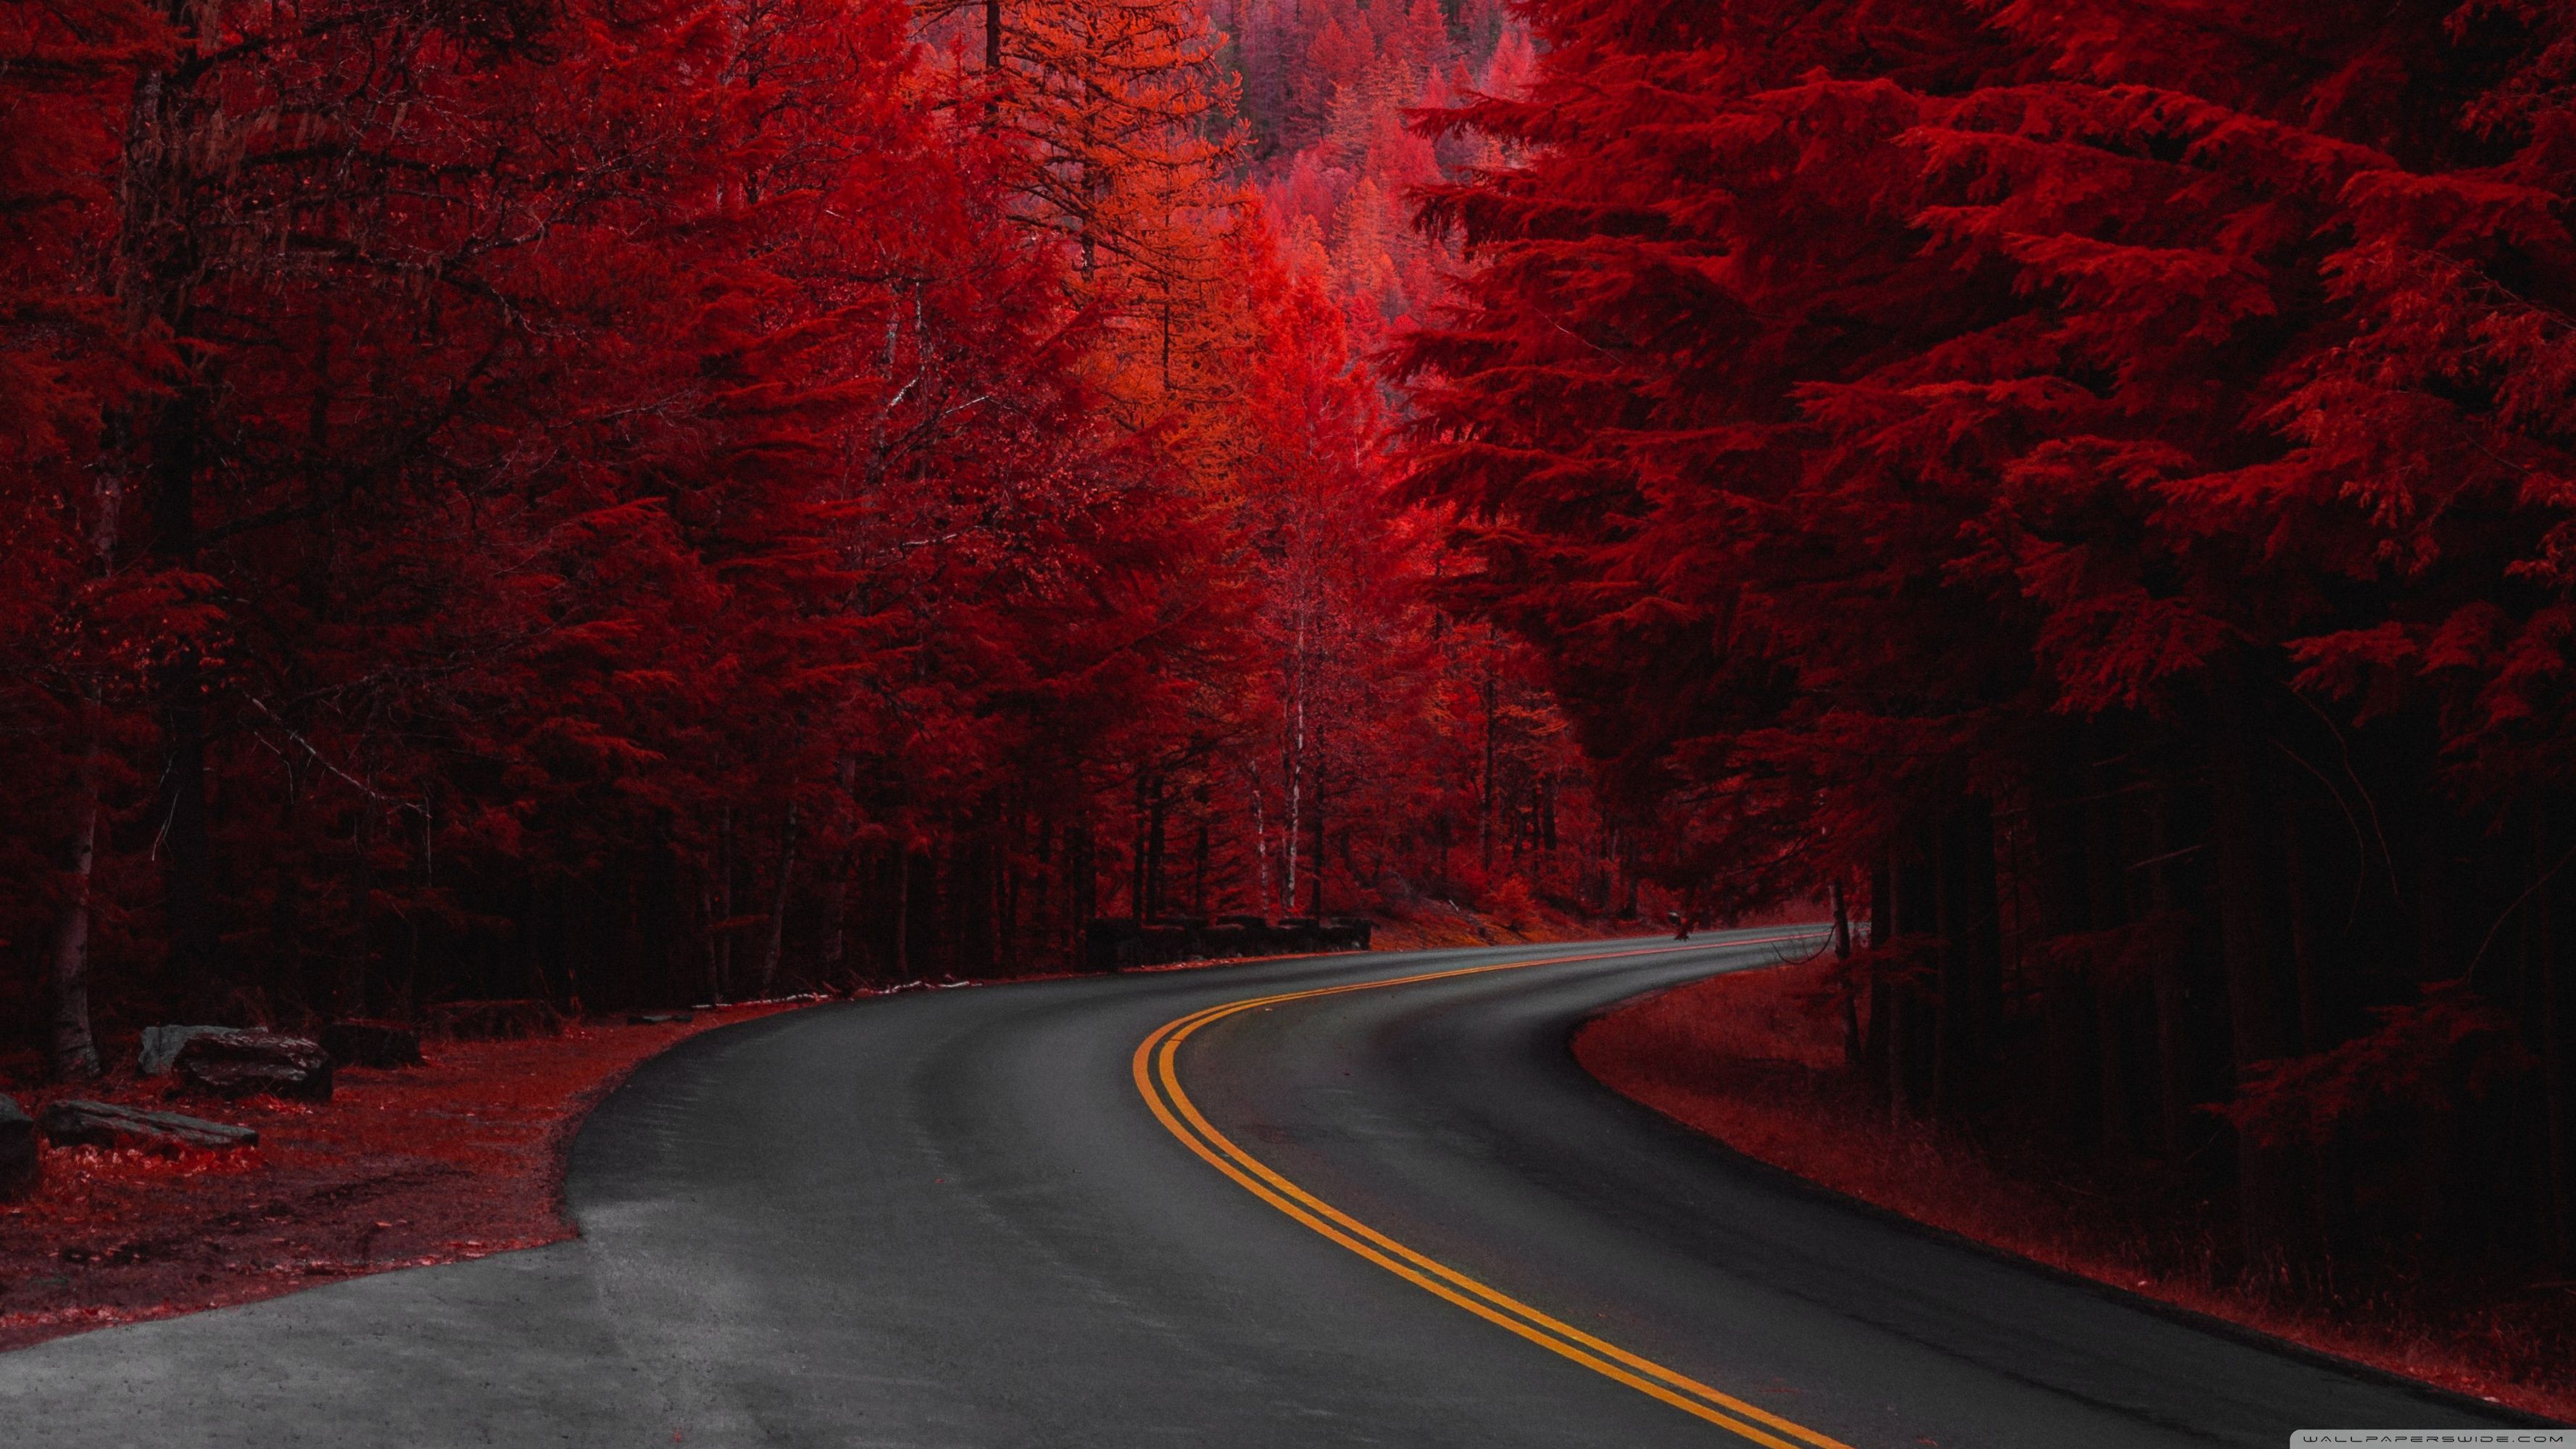 Red forest road 4K HD desktop wallpaper for 4K Ultra HD TV - Road